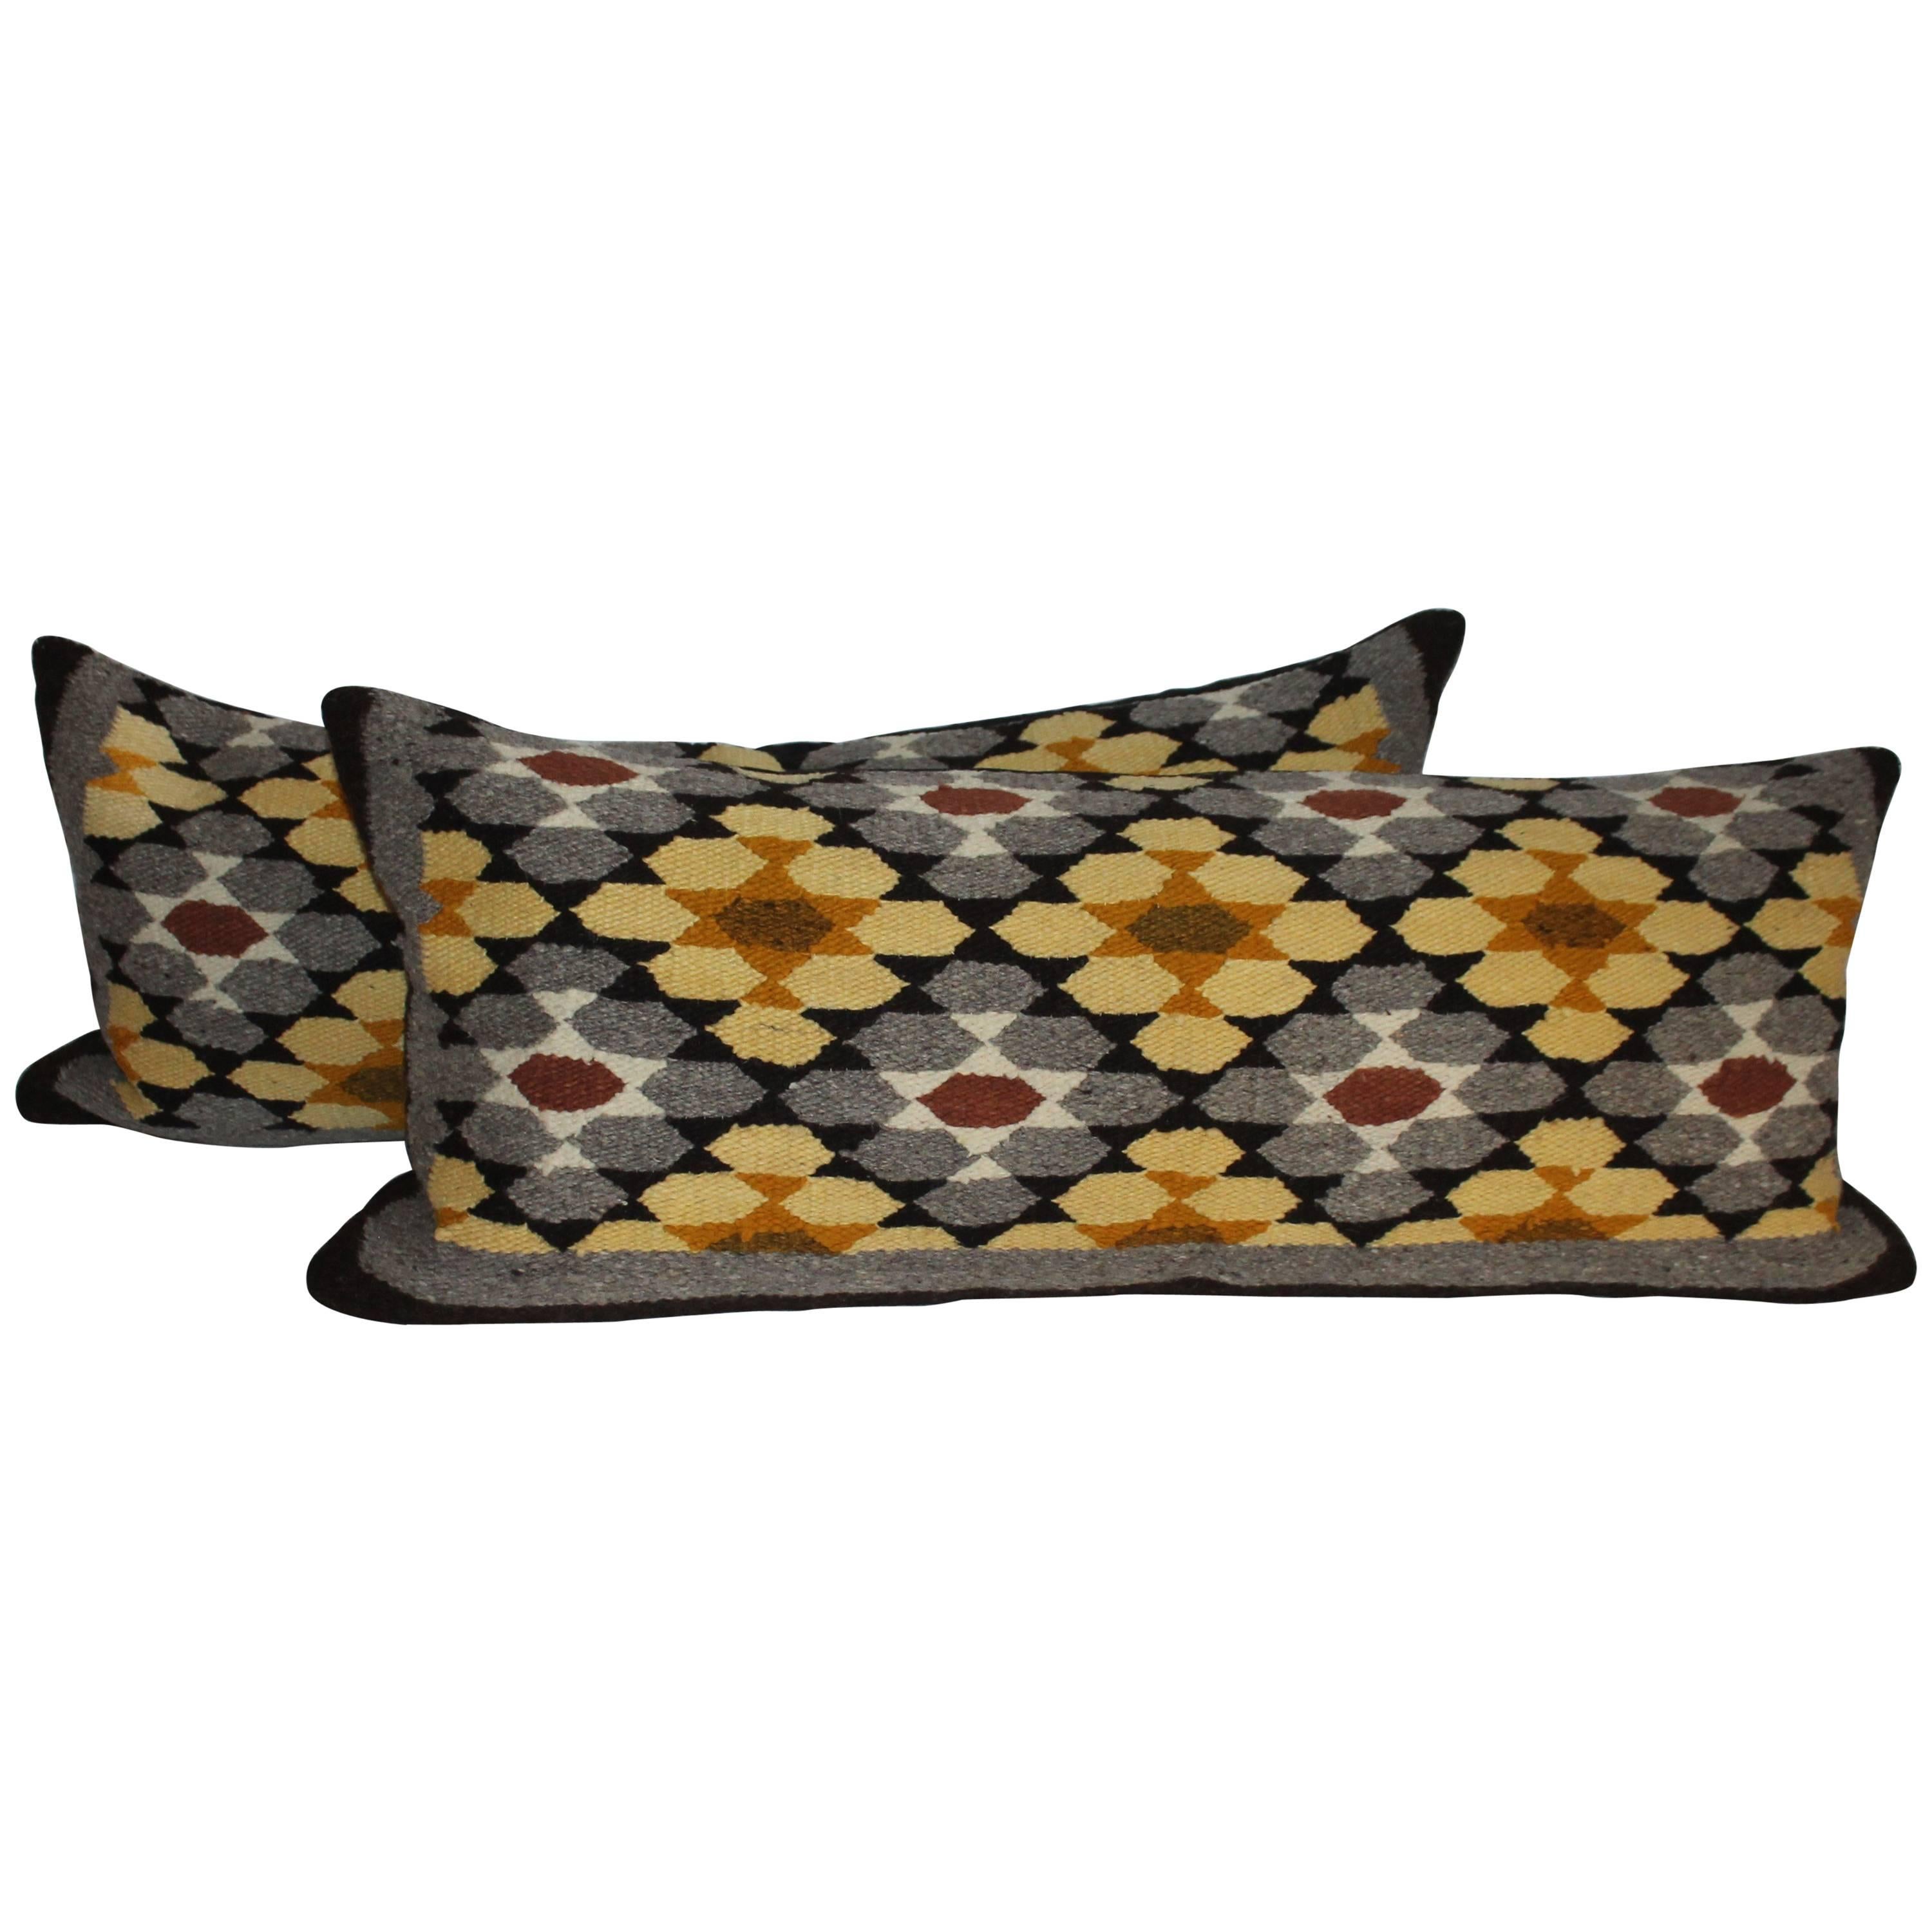 Navajo Indian Weaving Bolster Pillows, Two